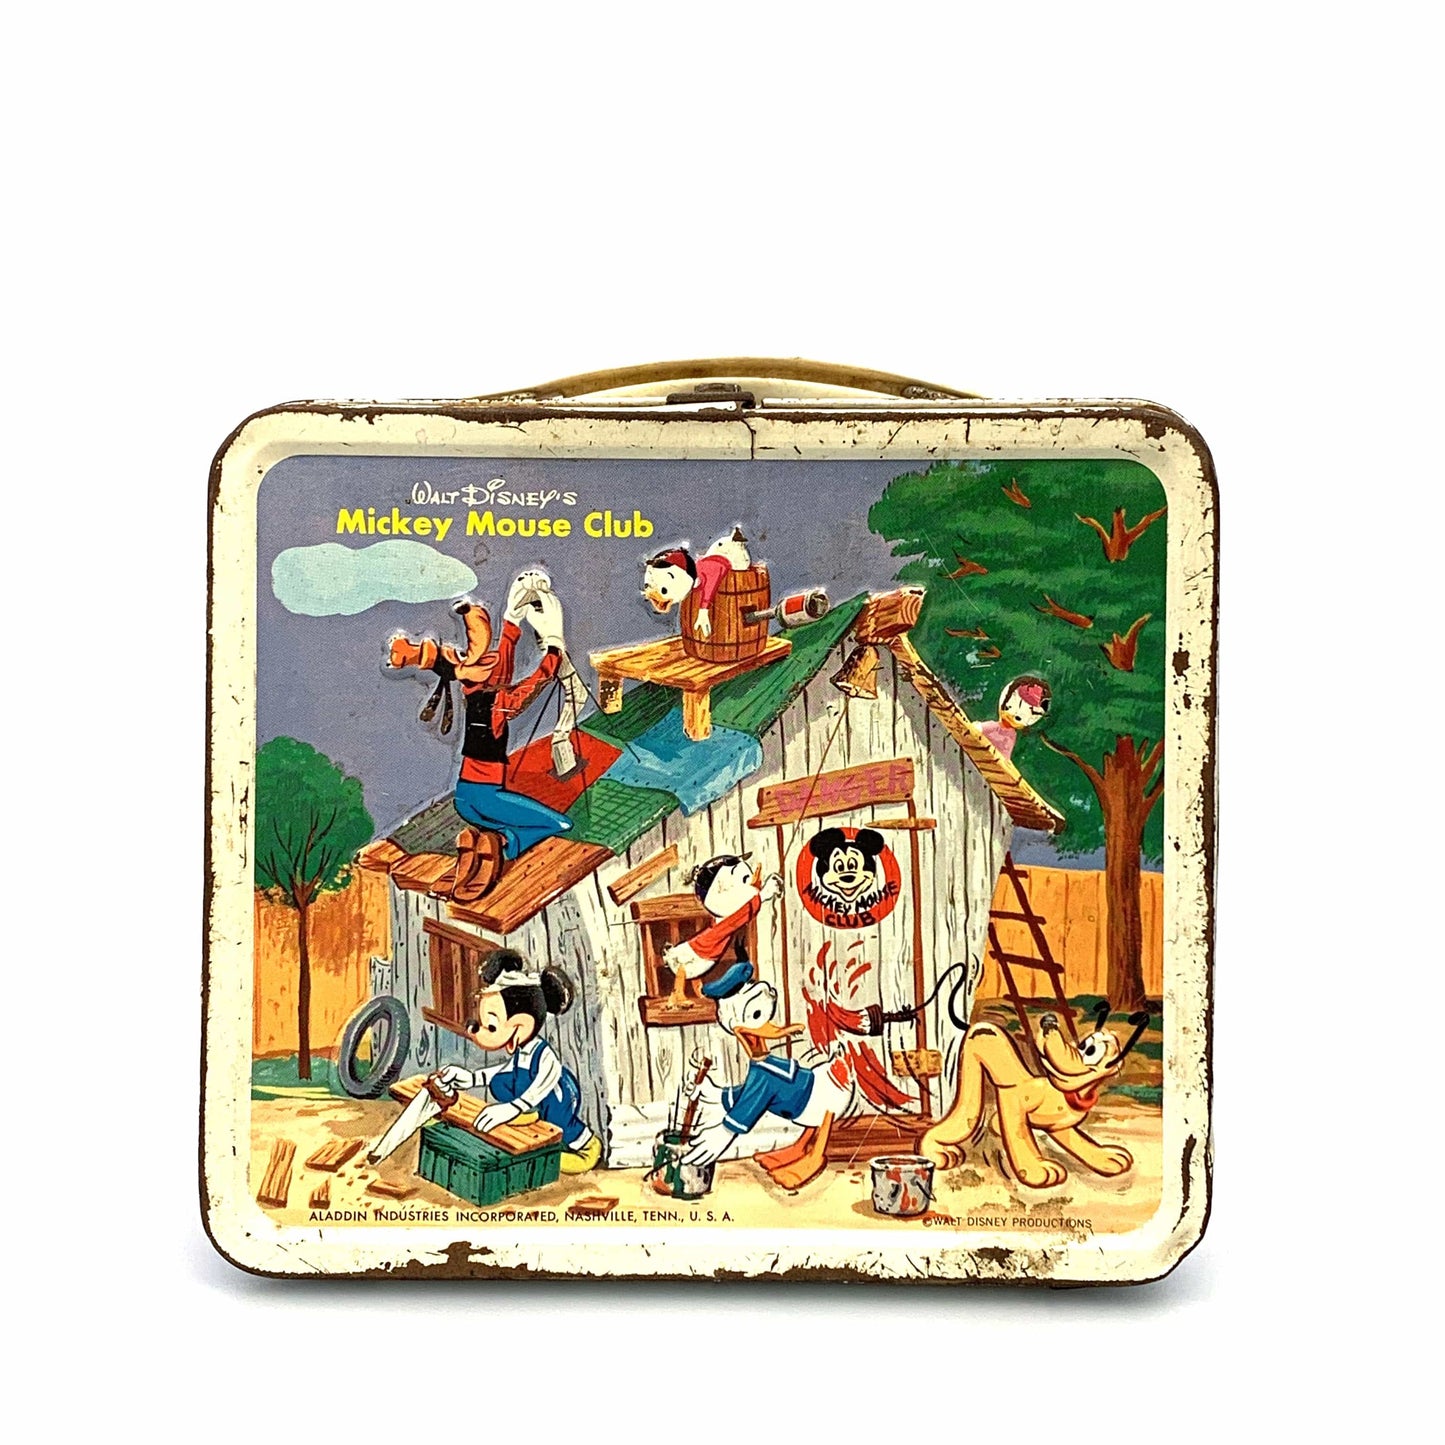 Vintage Aladdin Walt Disney’s Mickey Mouse Club Metal Lunch Box, 1963